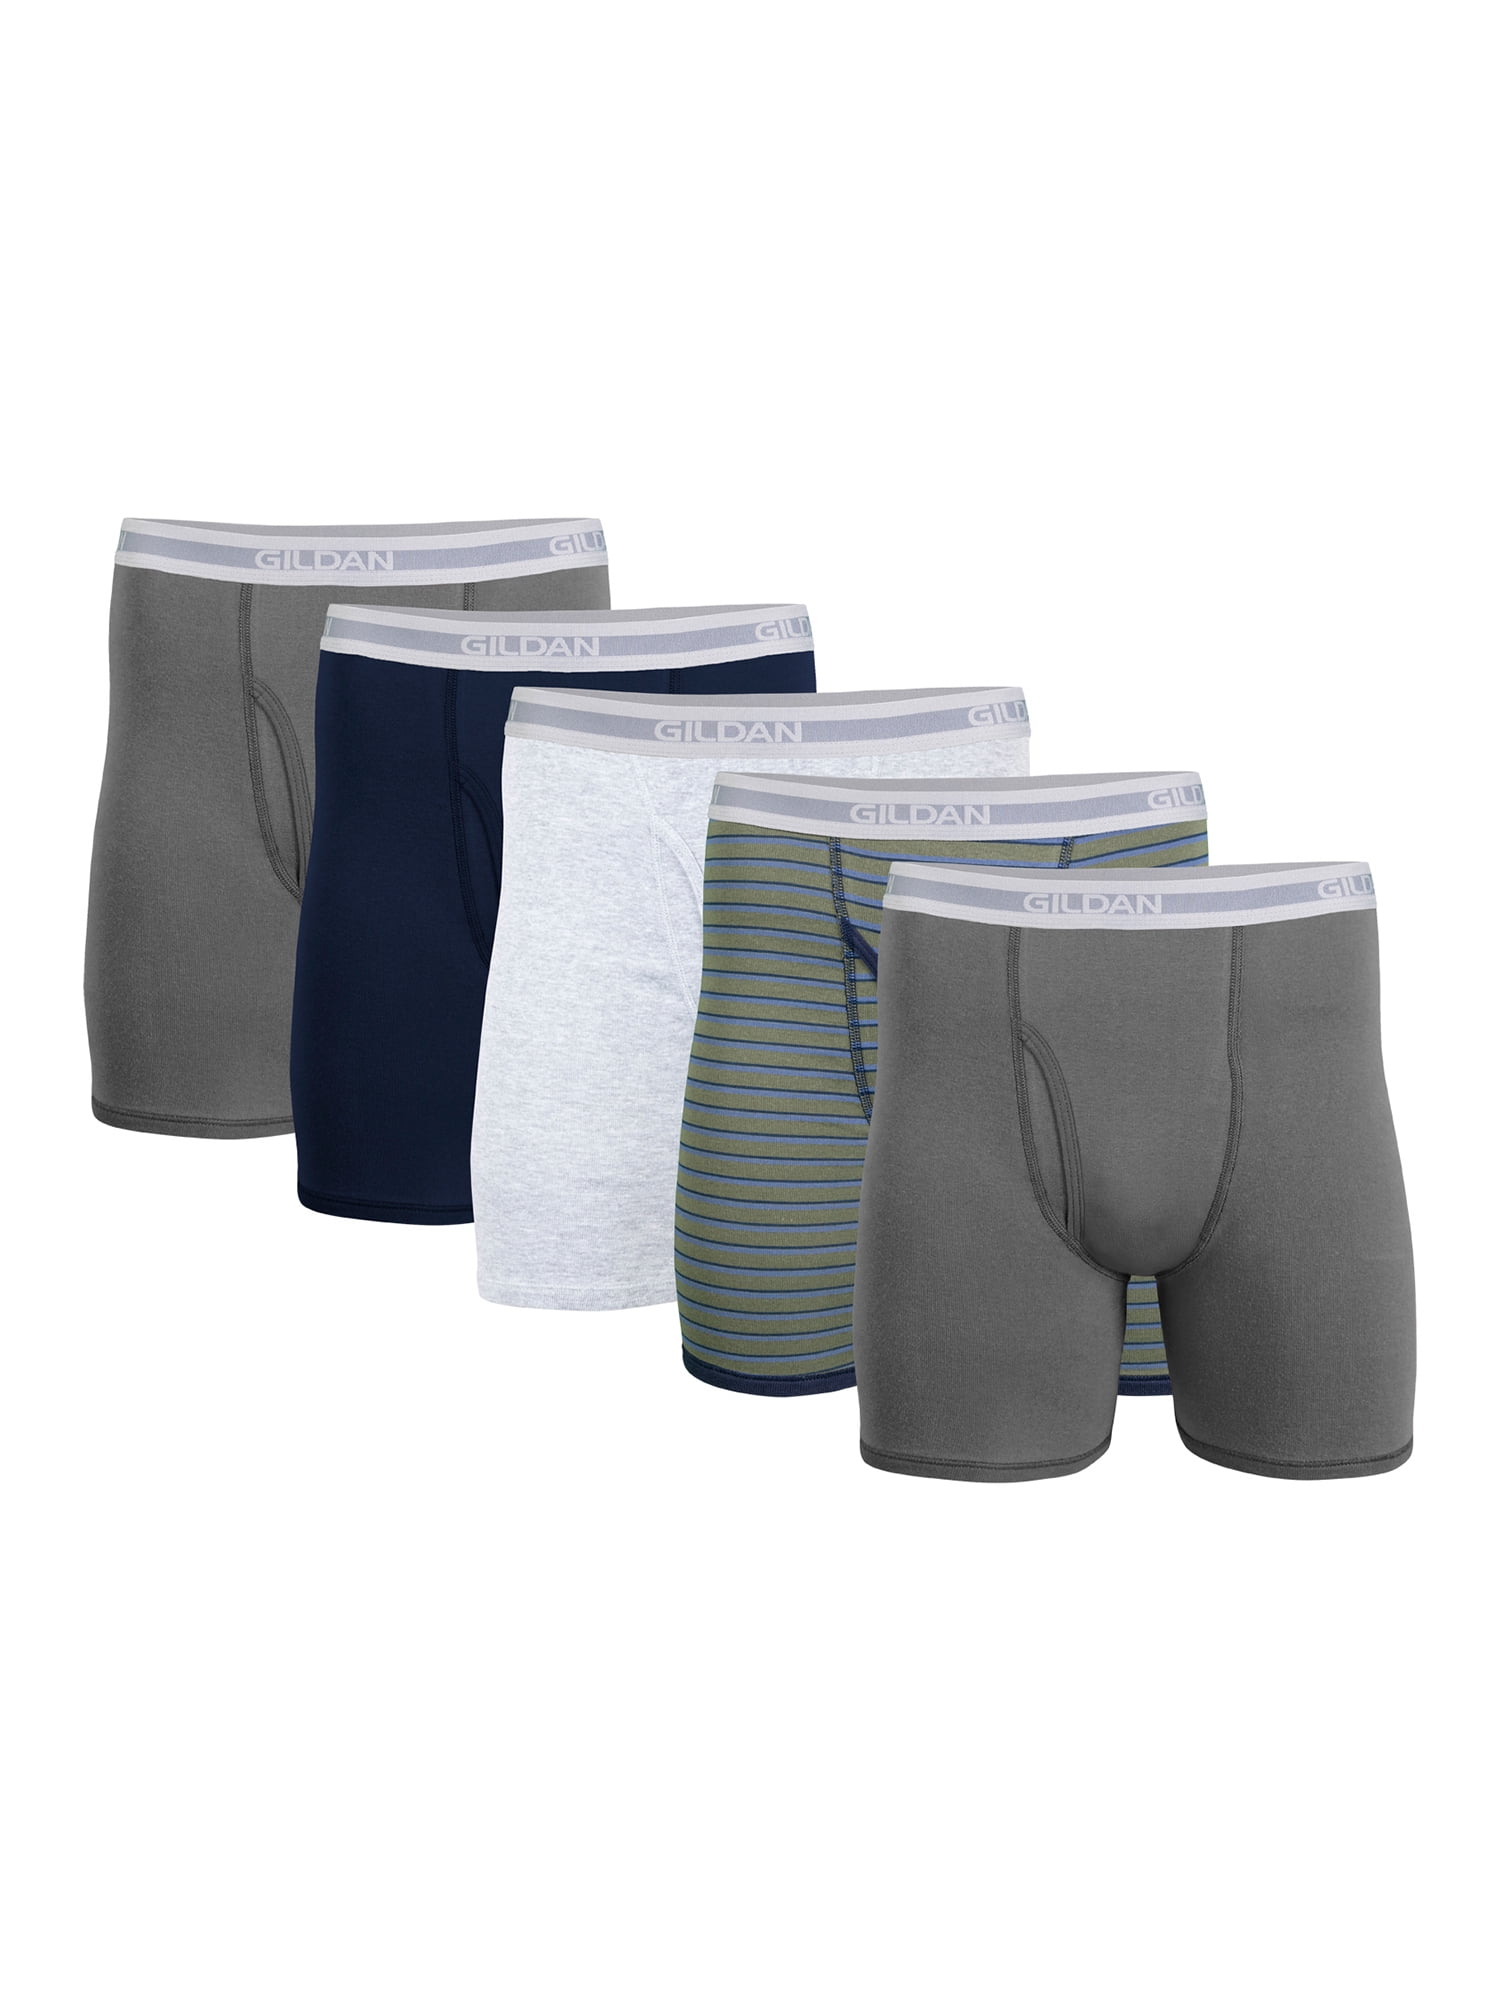 Gildan Adult Men's Regular Leg Boxer Briefs, 5-Pack, Sizes S-2XL, 6 Inseam